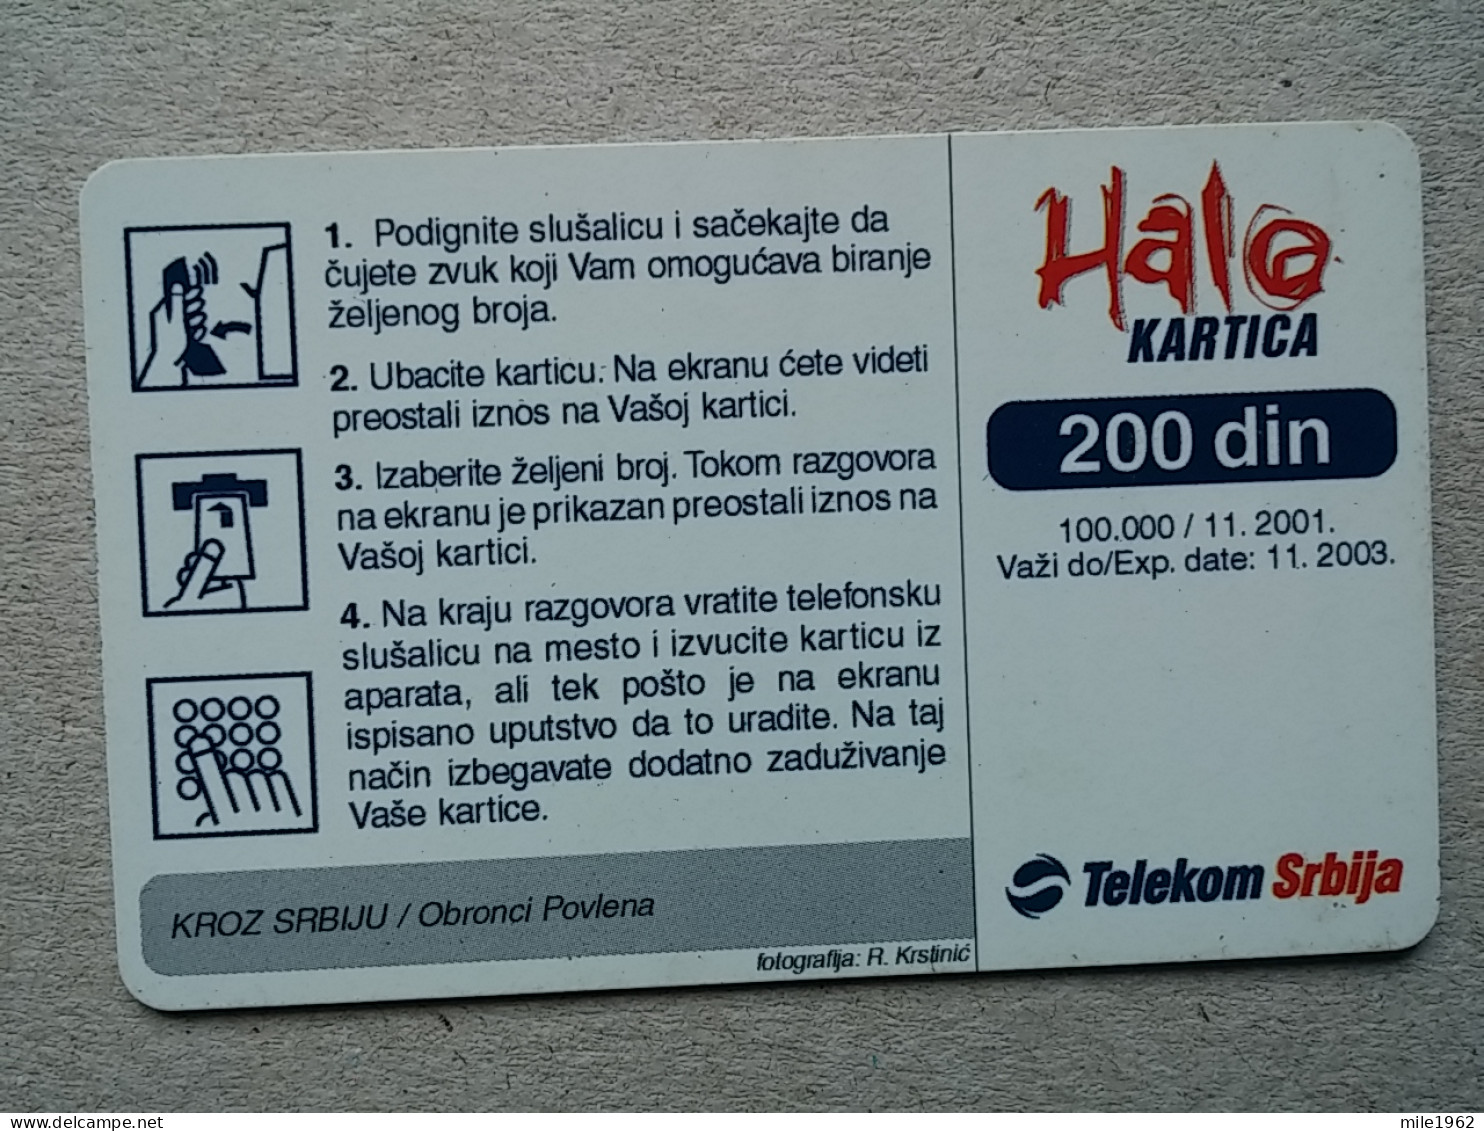 T-566 - SERBIA, Telecard, Télécarte, Phonecard, Halo Kartica - Yugoslavia